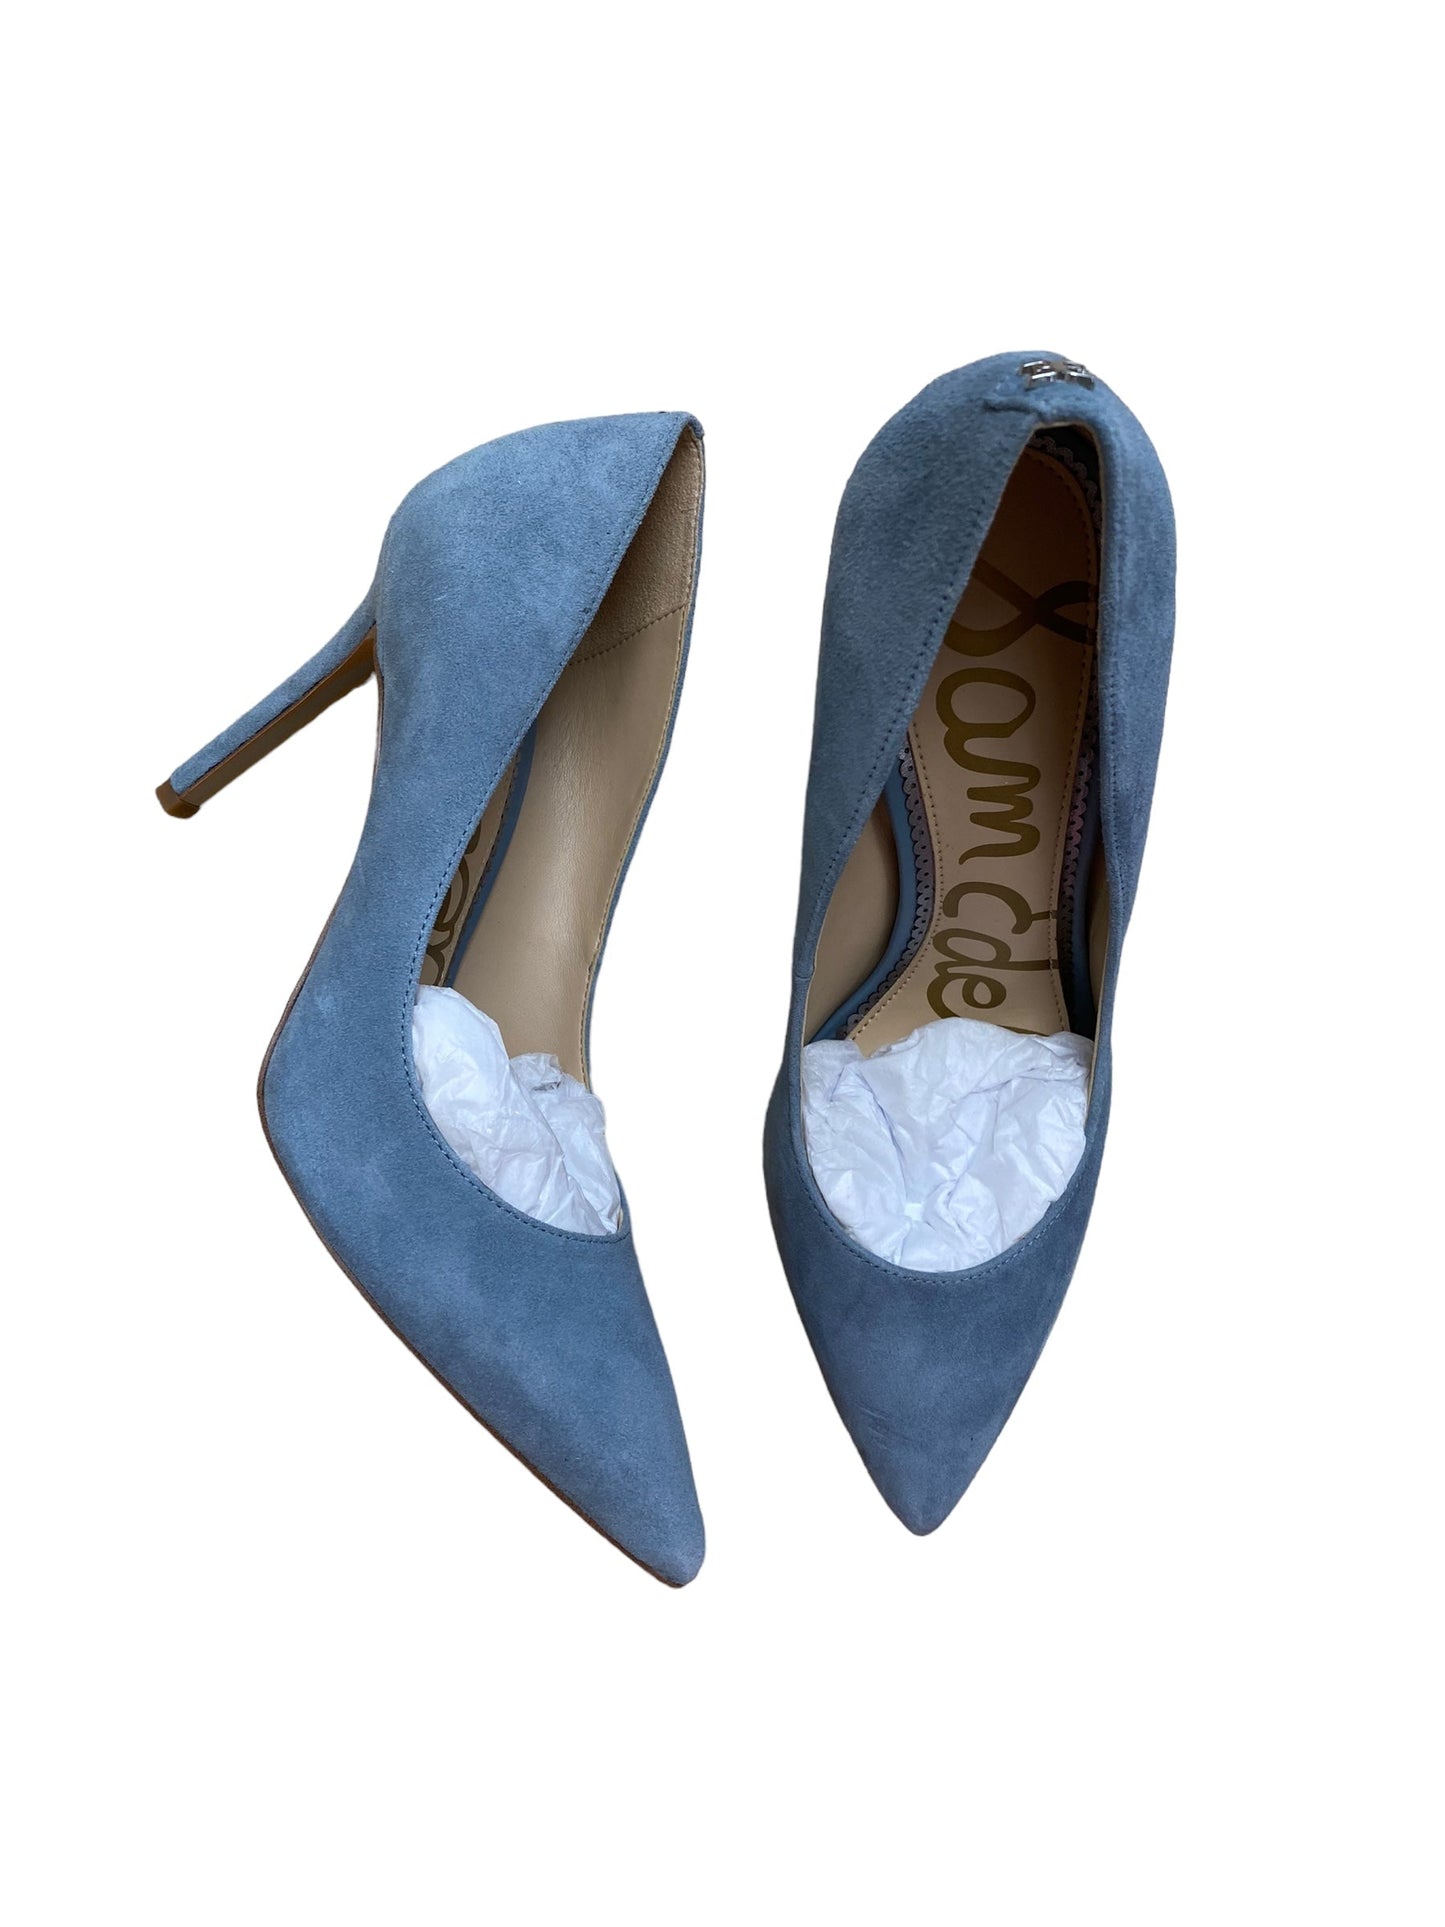 Blue Shoes Heels Stiletto Sam Edelman, Size 6